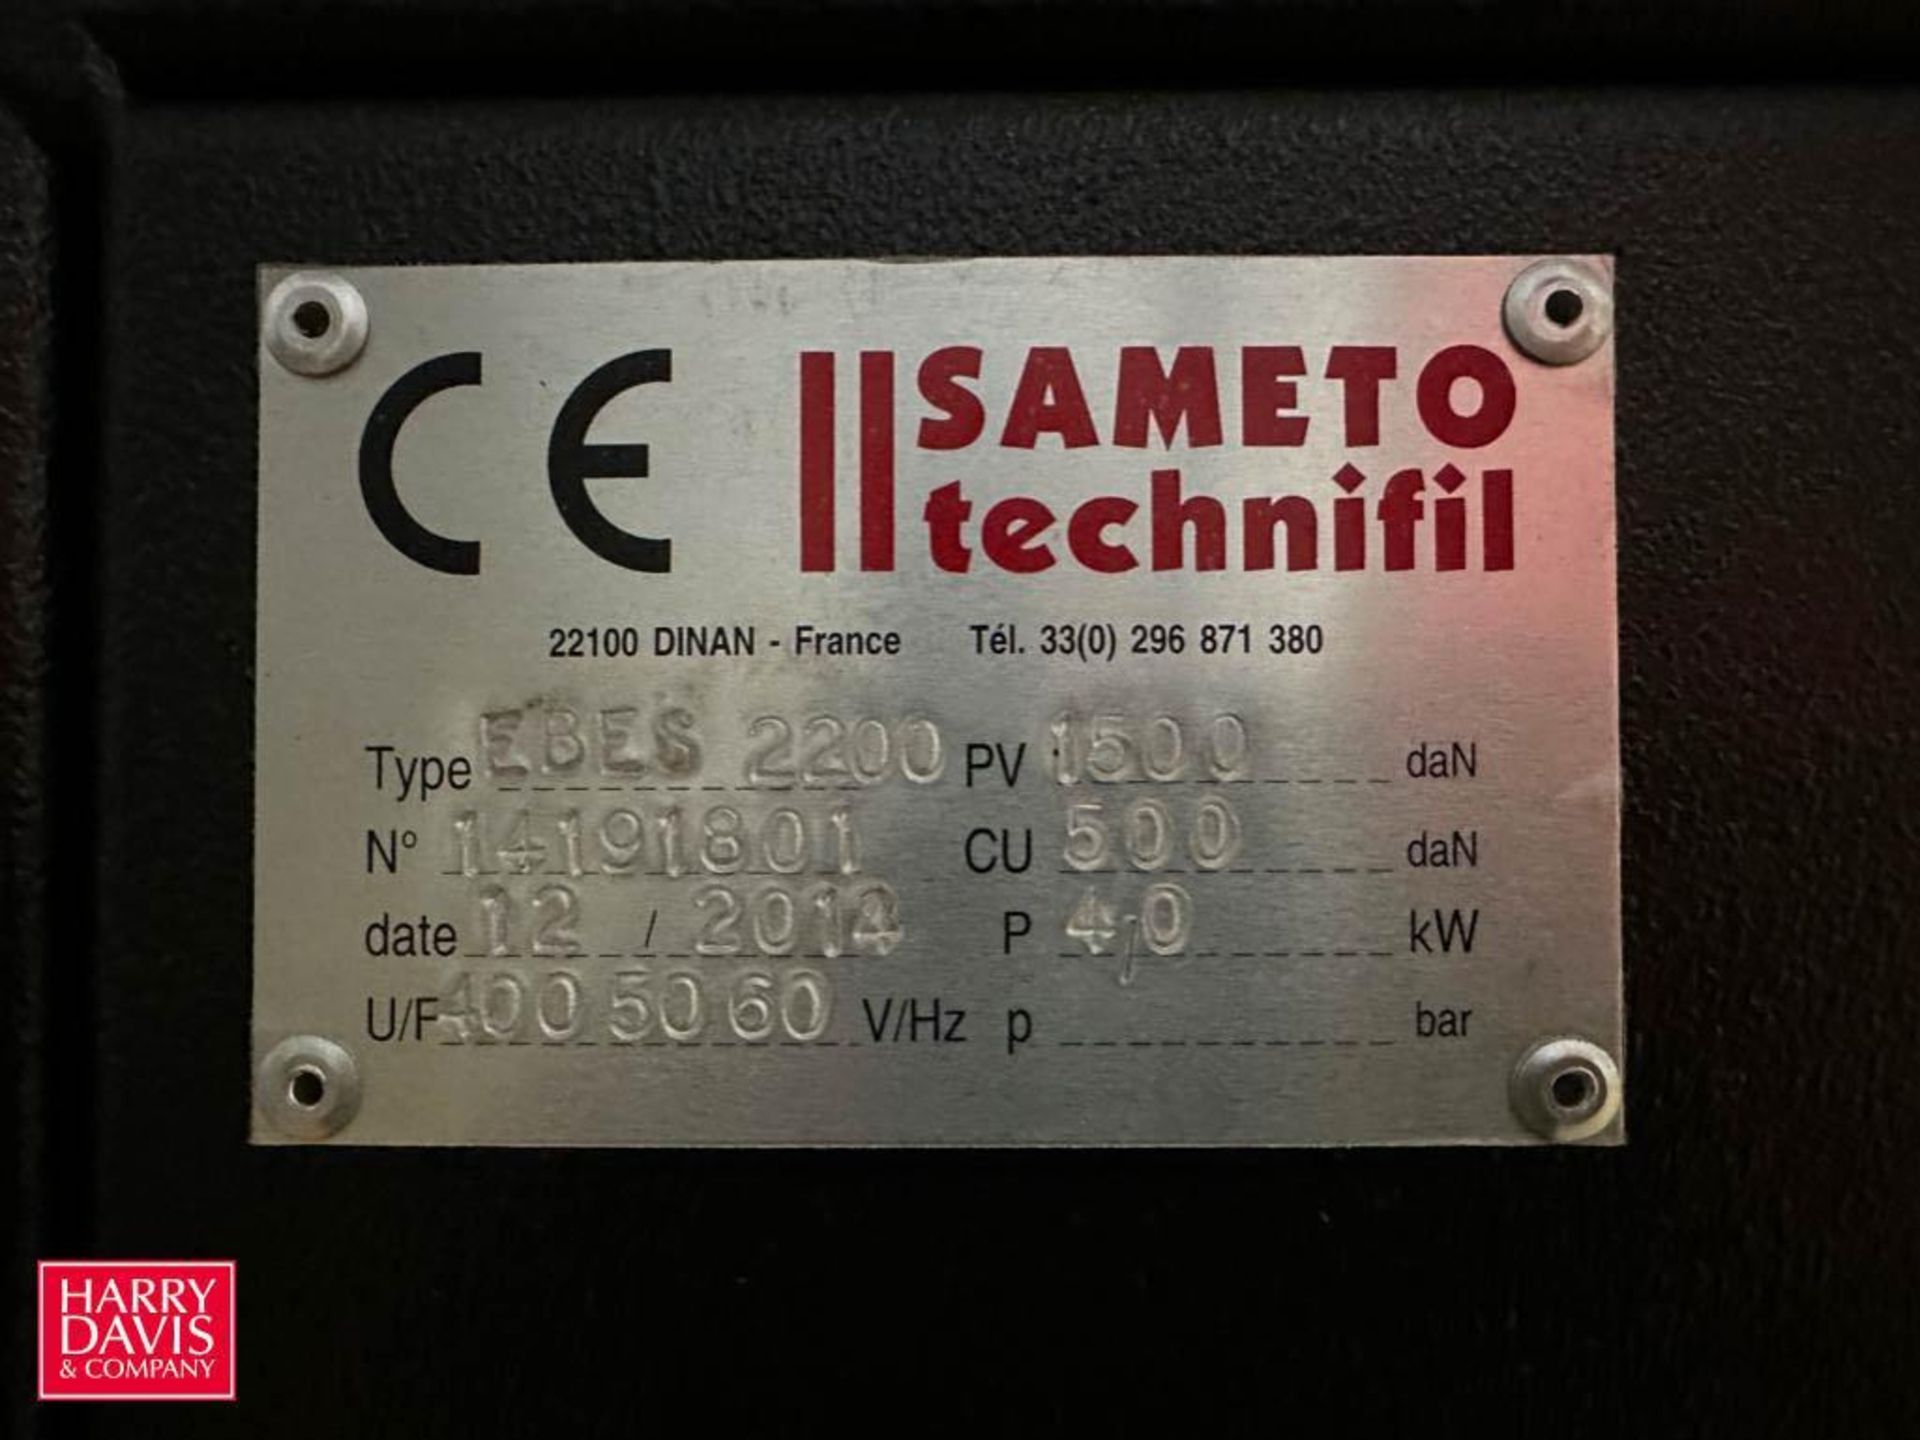 2014 Sameto Technifil Dumper, Model: EBES2200, S/N: 14191801 - Rigging Fee: $500 - Image 2 of 4